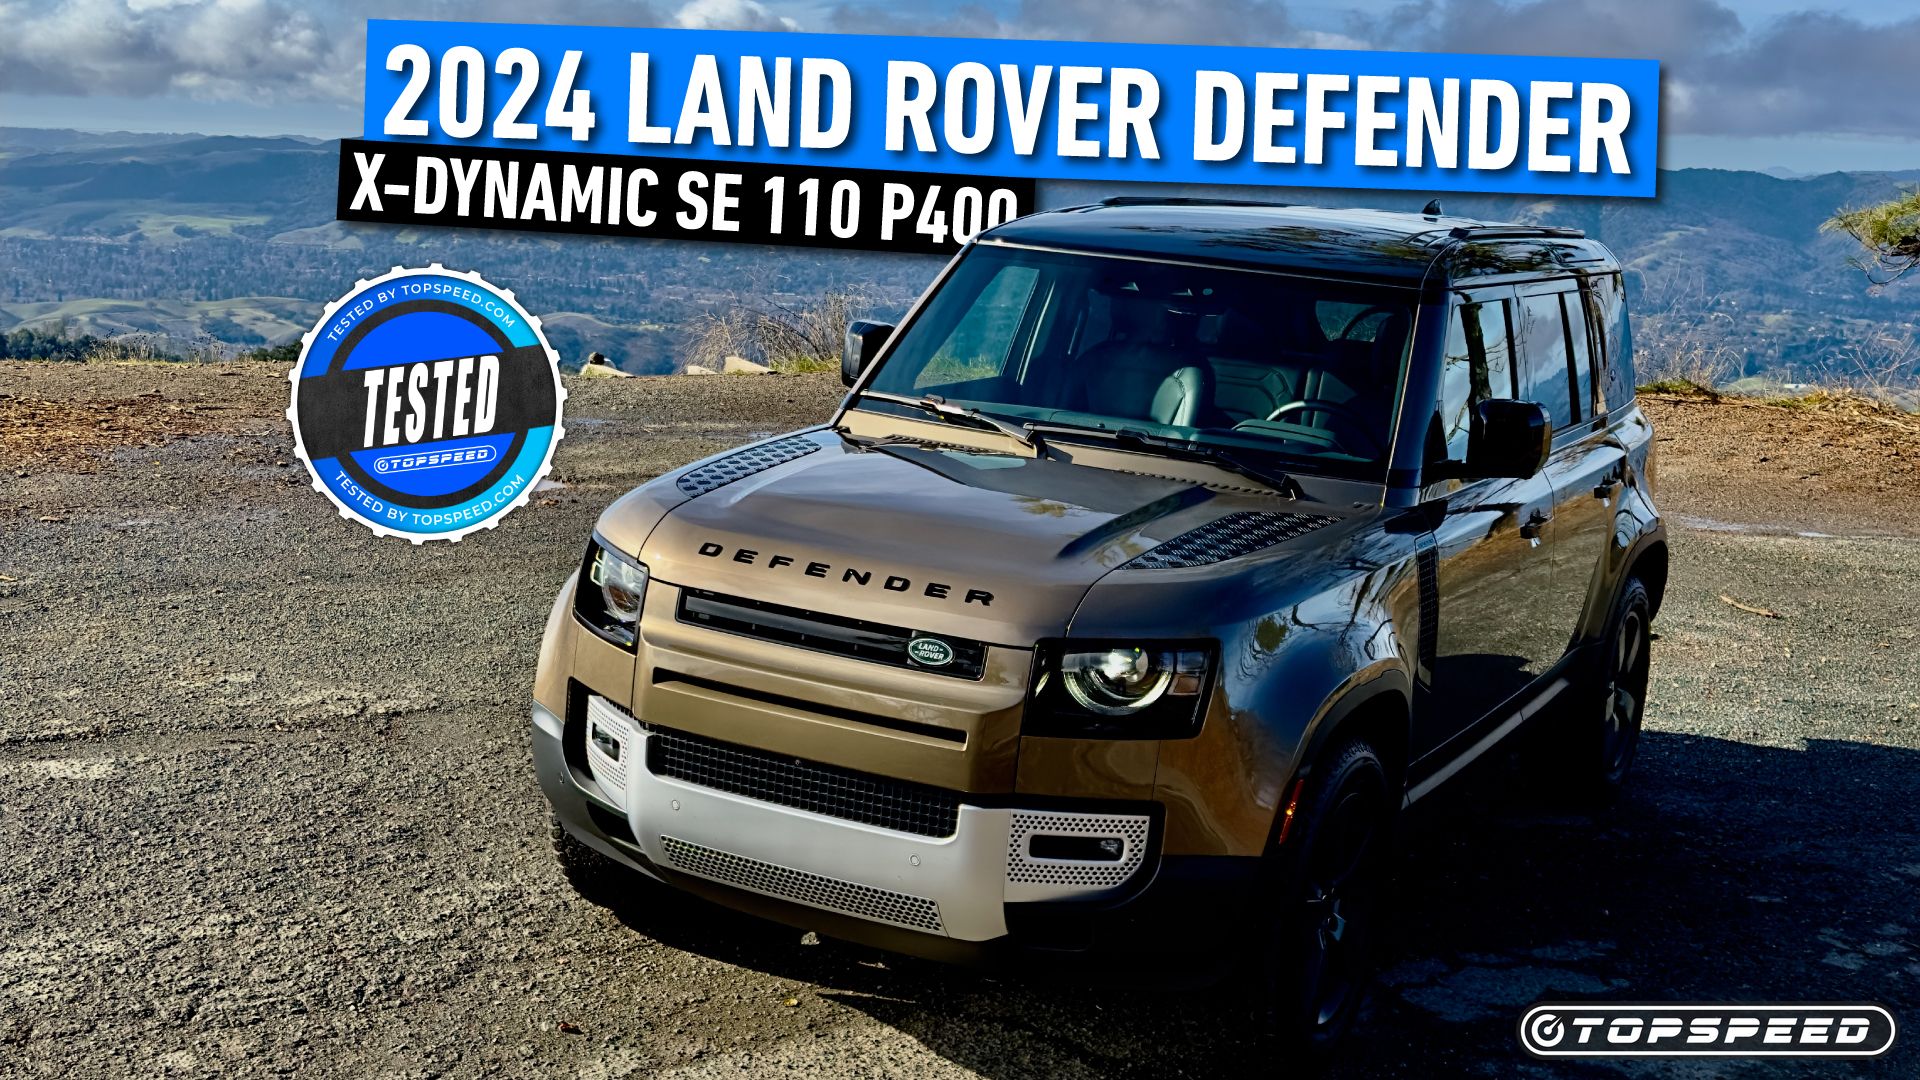 2024-Land-Rover-Defender-X-Dynamic-SE-110-P400